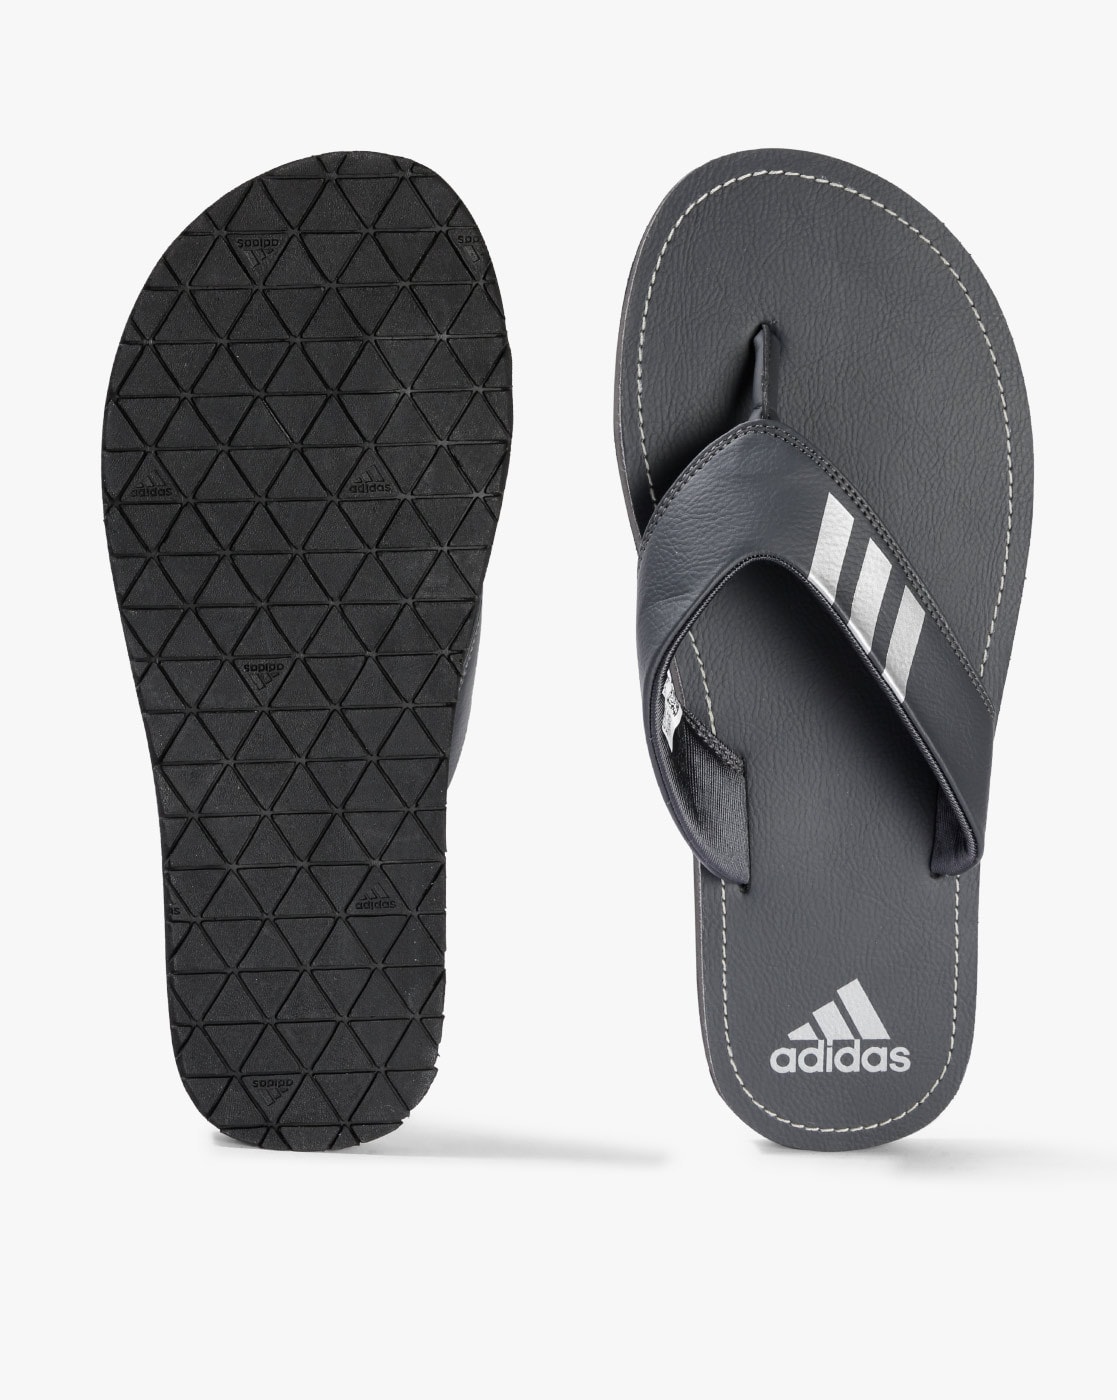 adidas gray thong flip flop